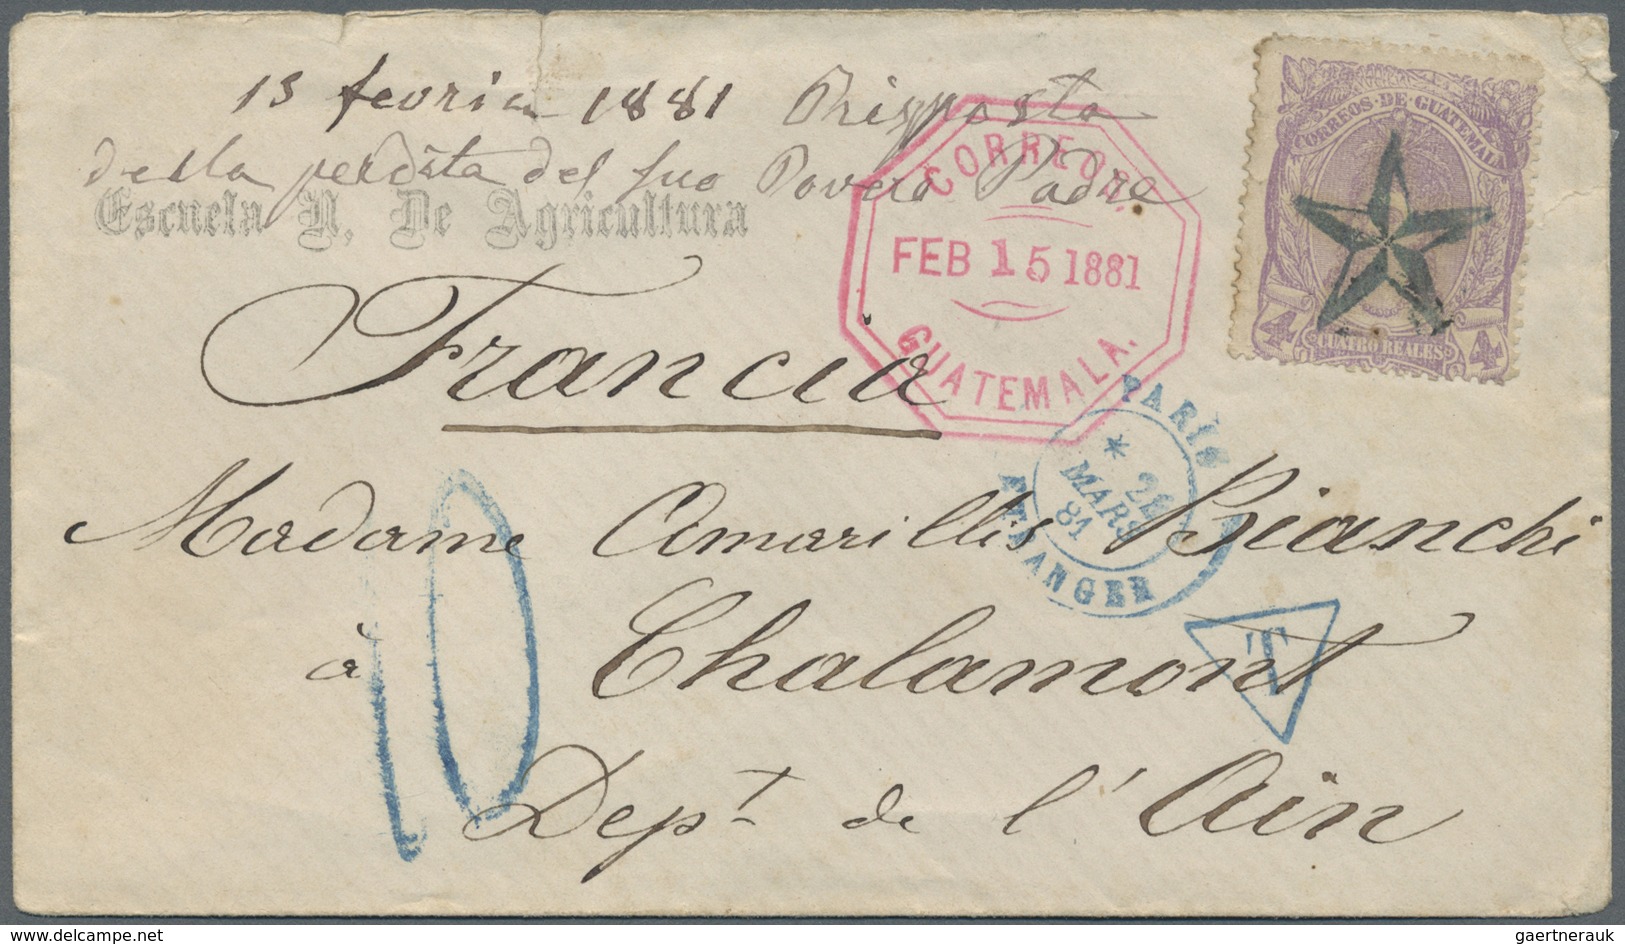 Br Guatemala: 1877. Envelope Addressed To France Bearing Yvert 13, 4r Violet Tied By Star Obliterator I - Guatemala